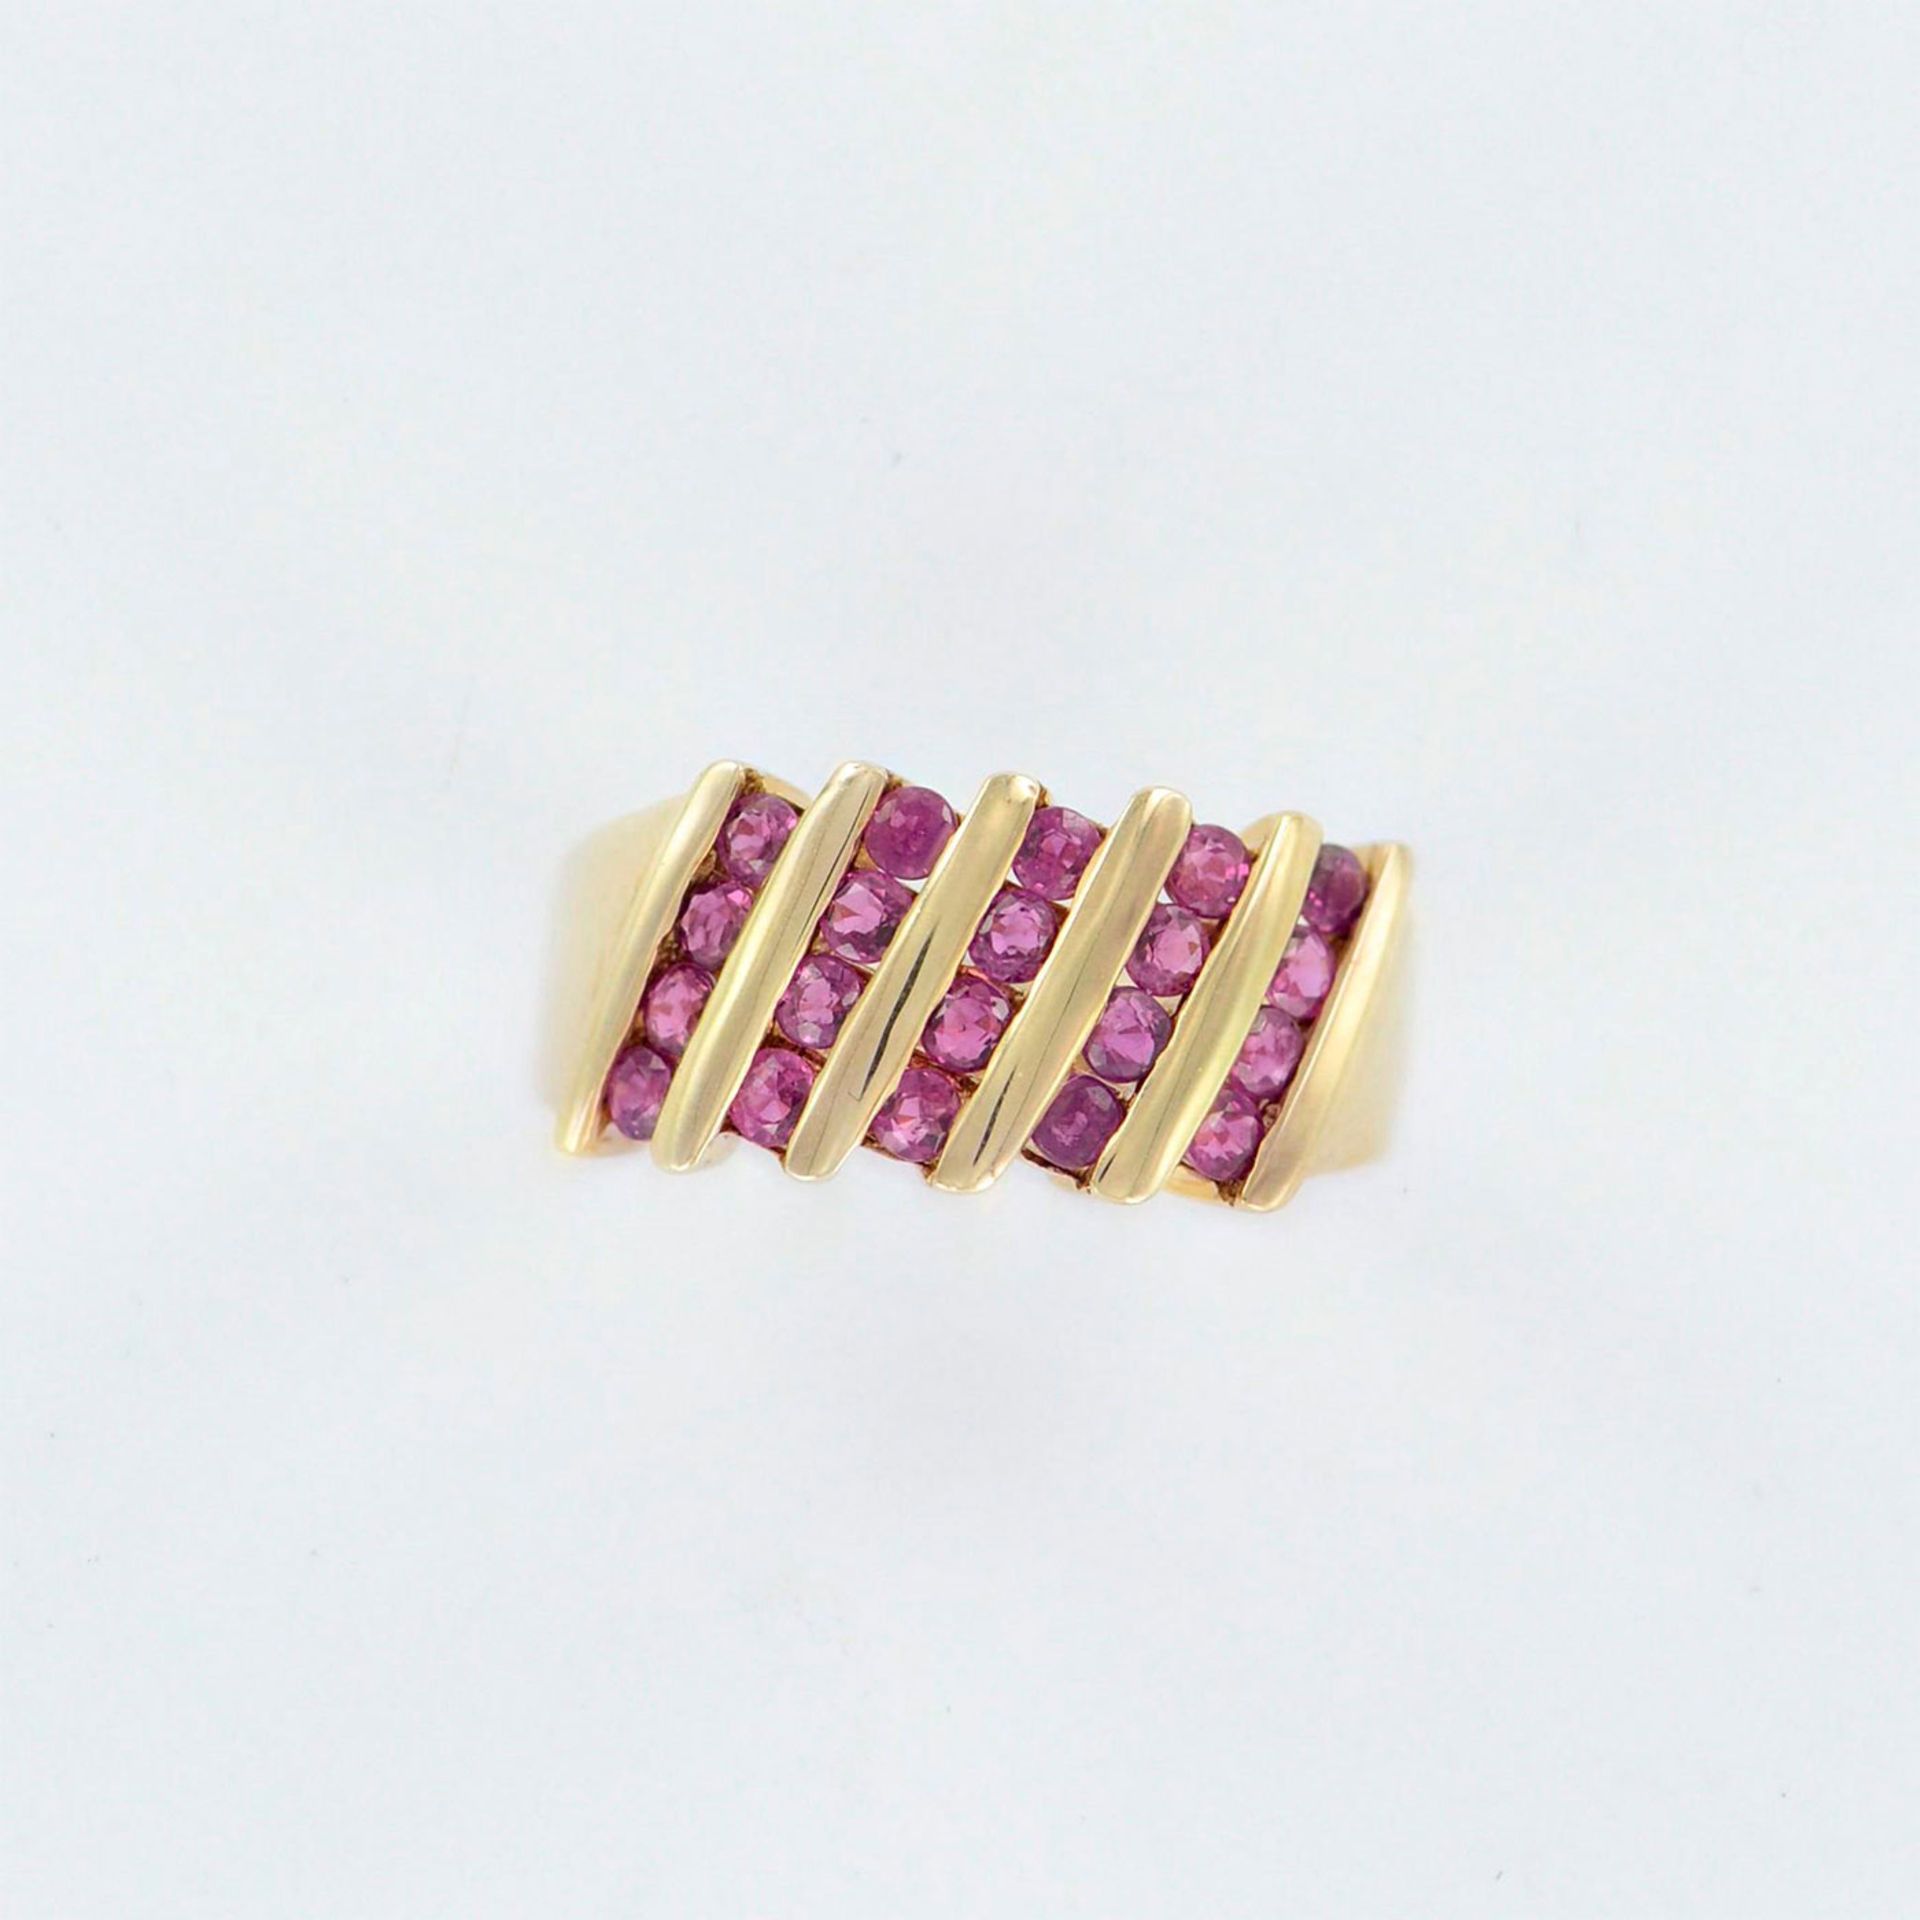 Samuel Aaron, Inc. 10k Gold with Pink Gemstones Ring - Image 2 of 5